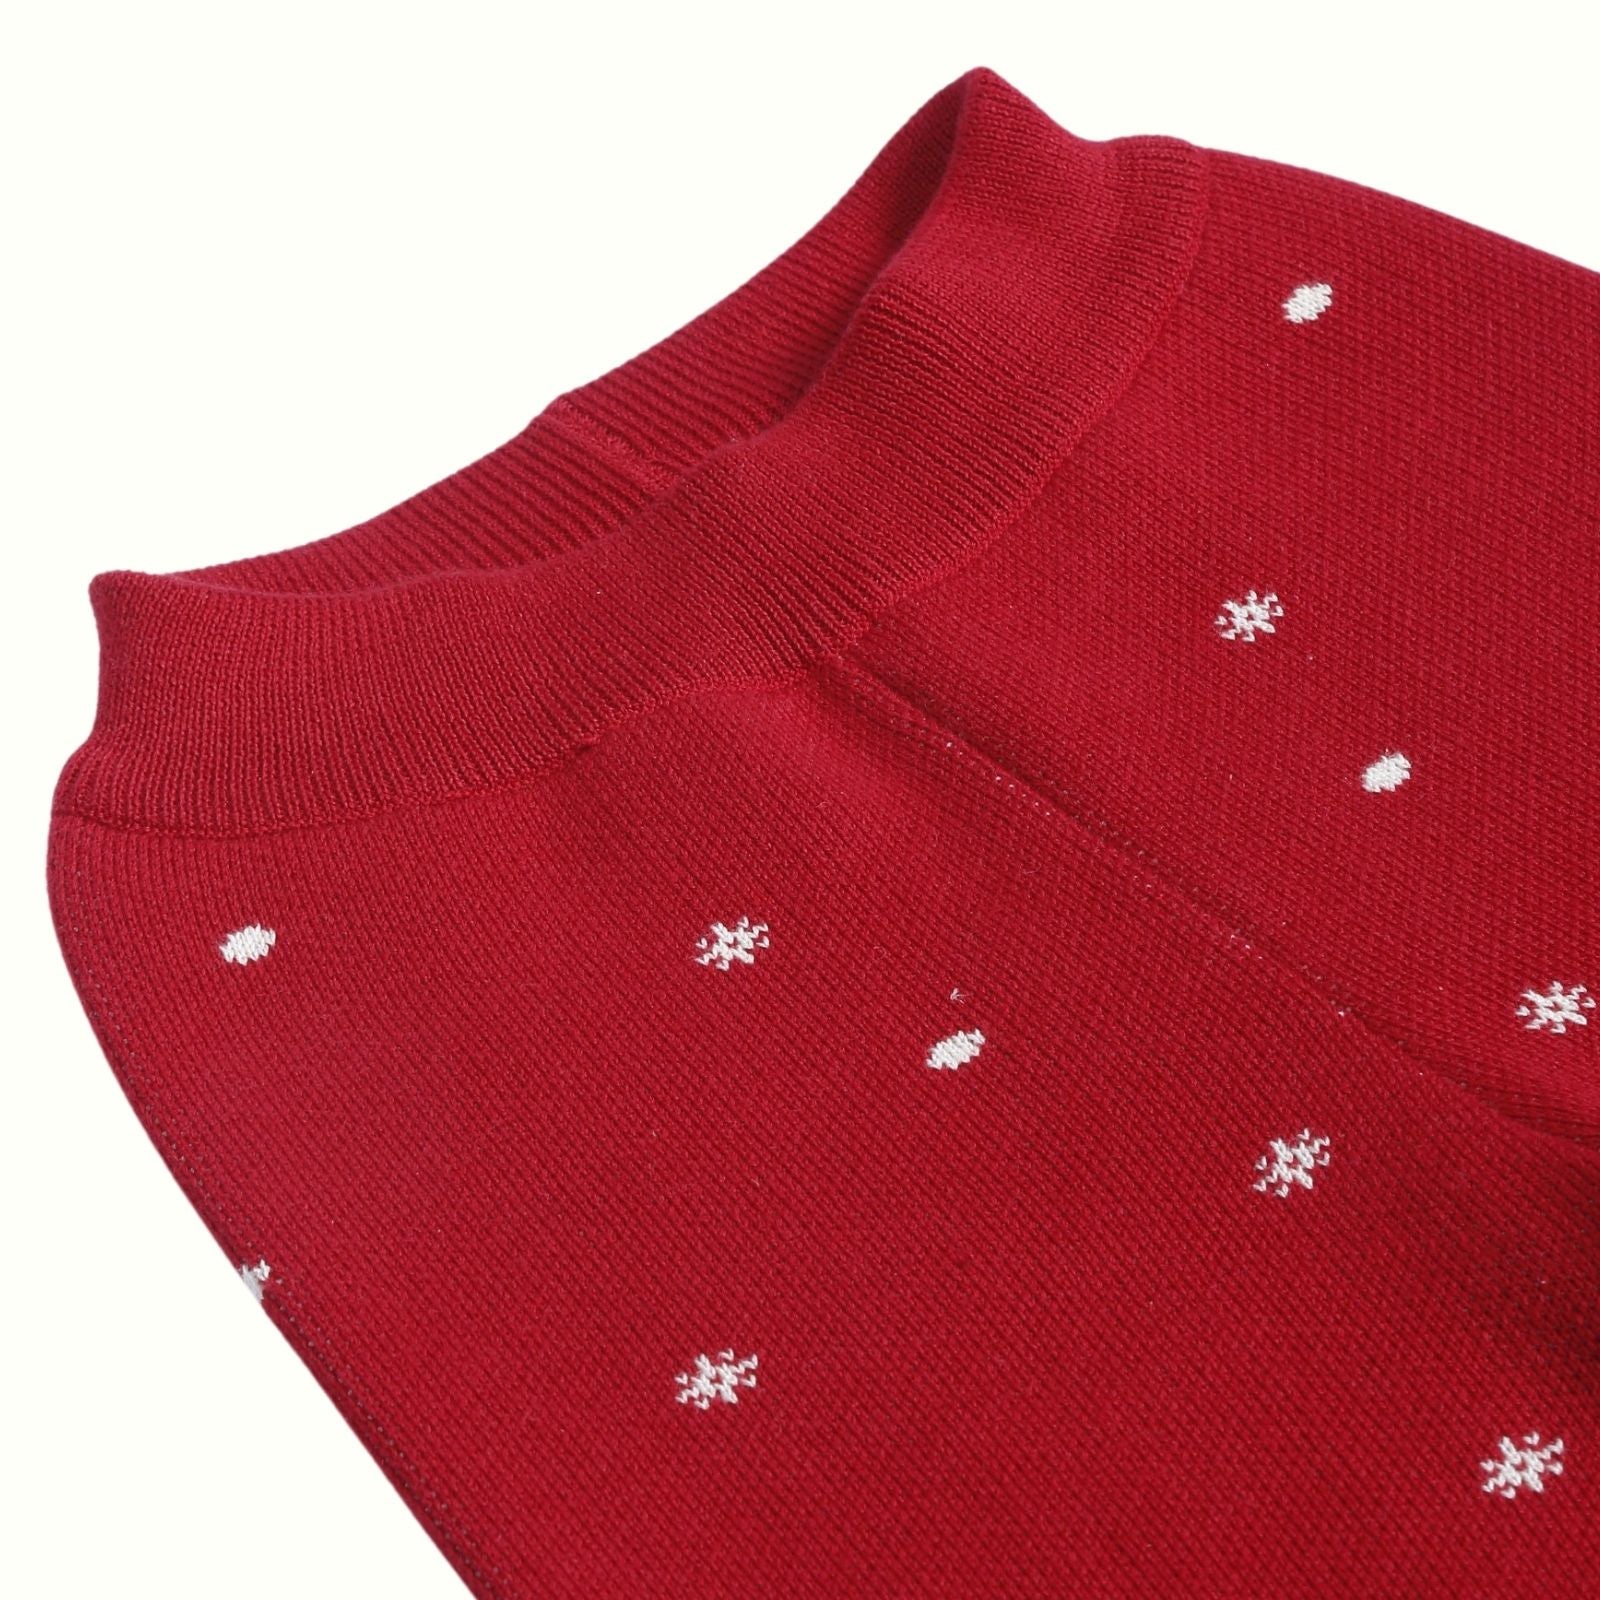 Greendeer Jaunty Reindeer 100% Cotton Sweater with Lower Set of 4